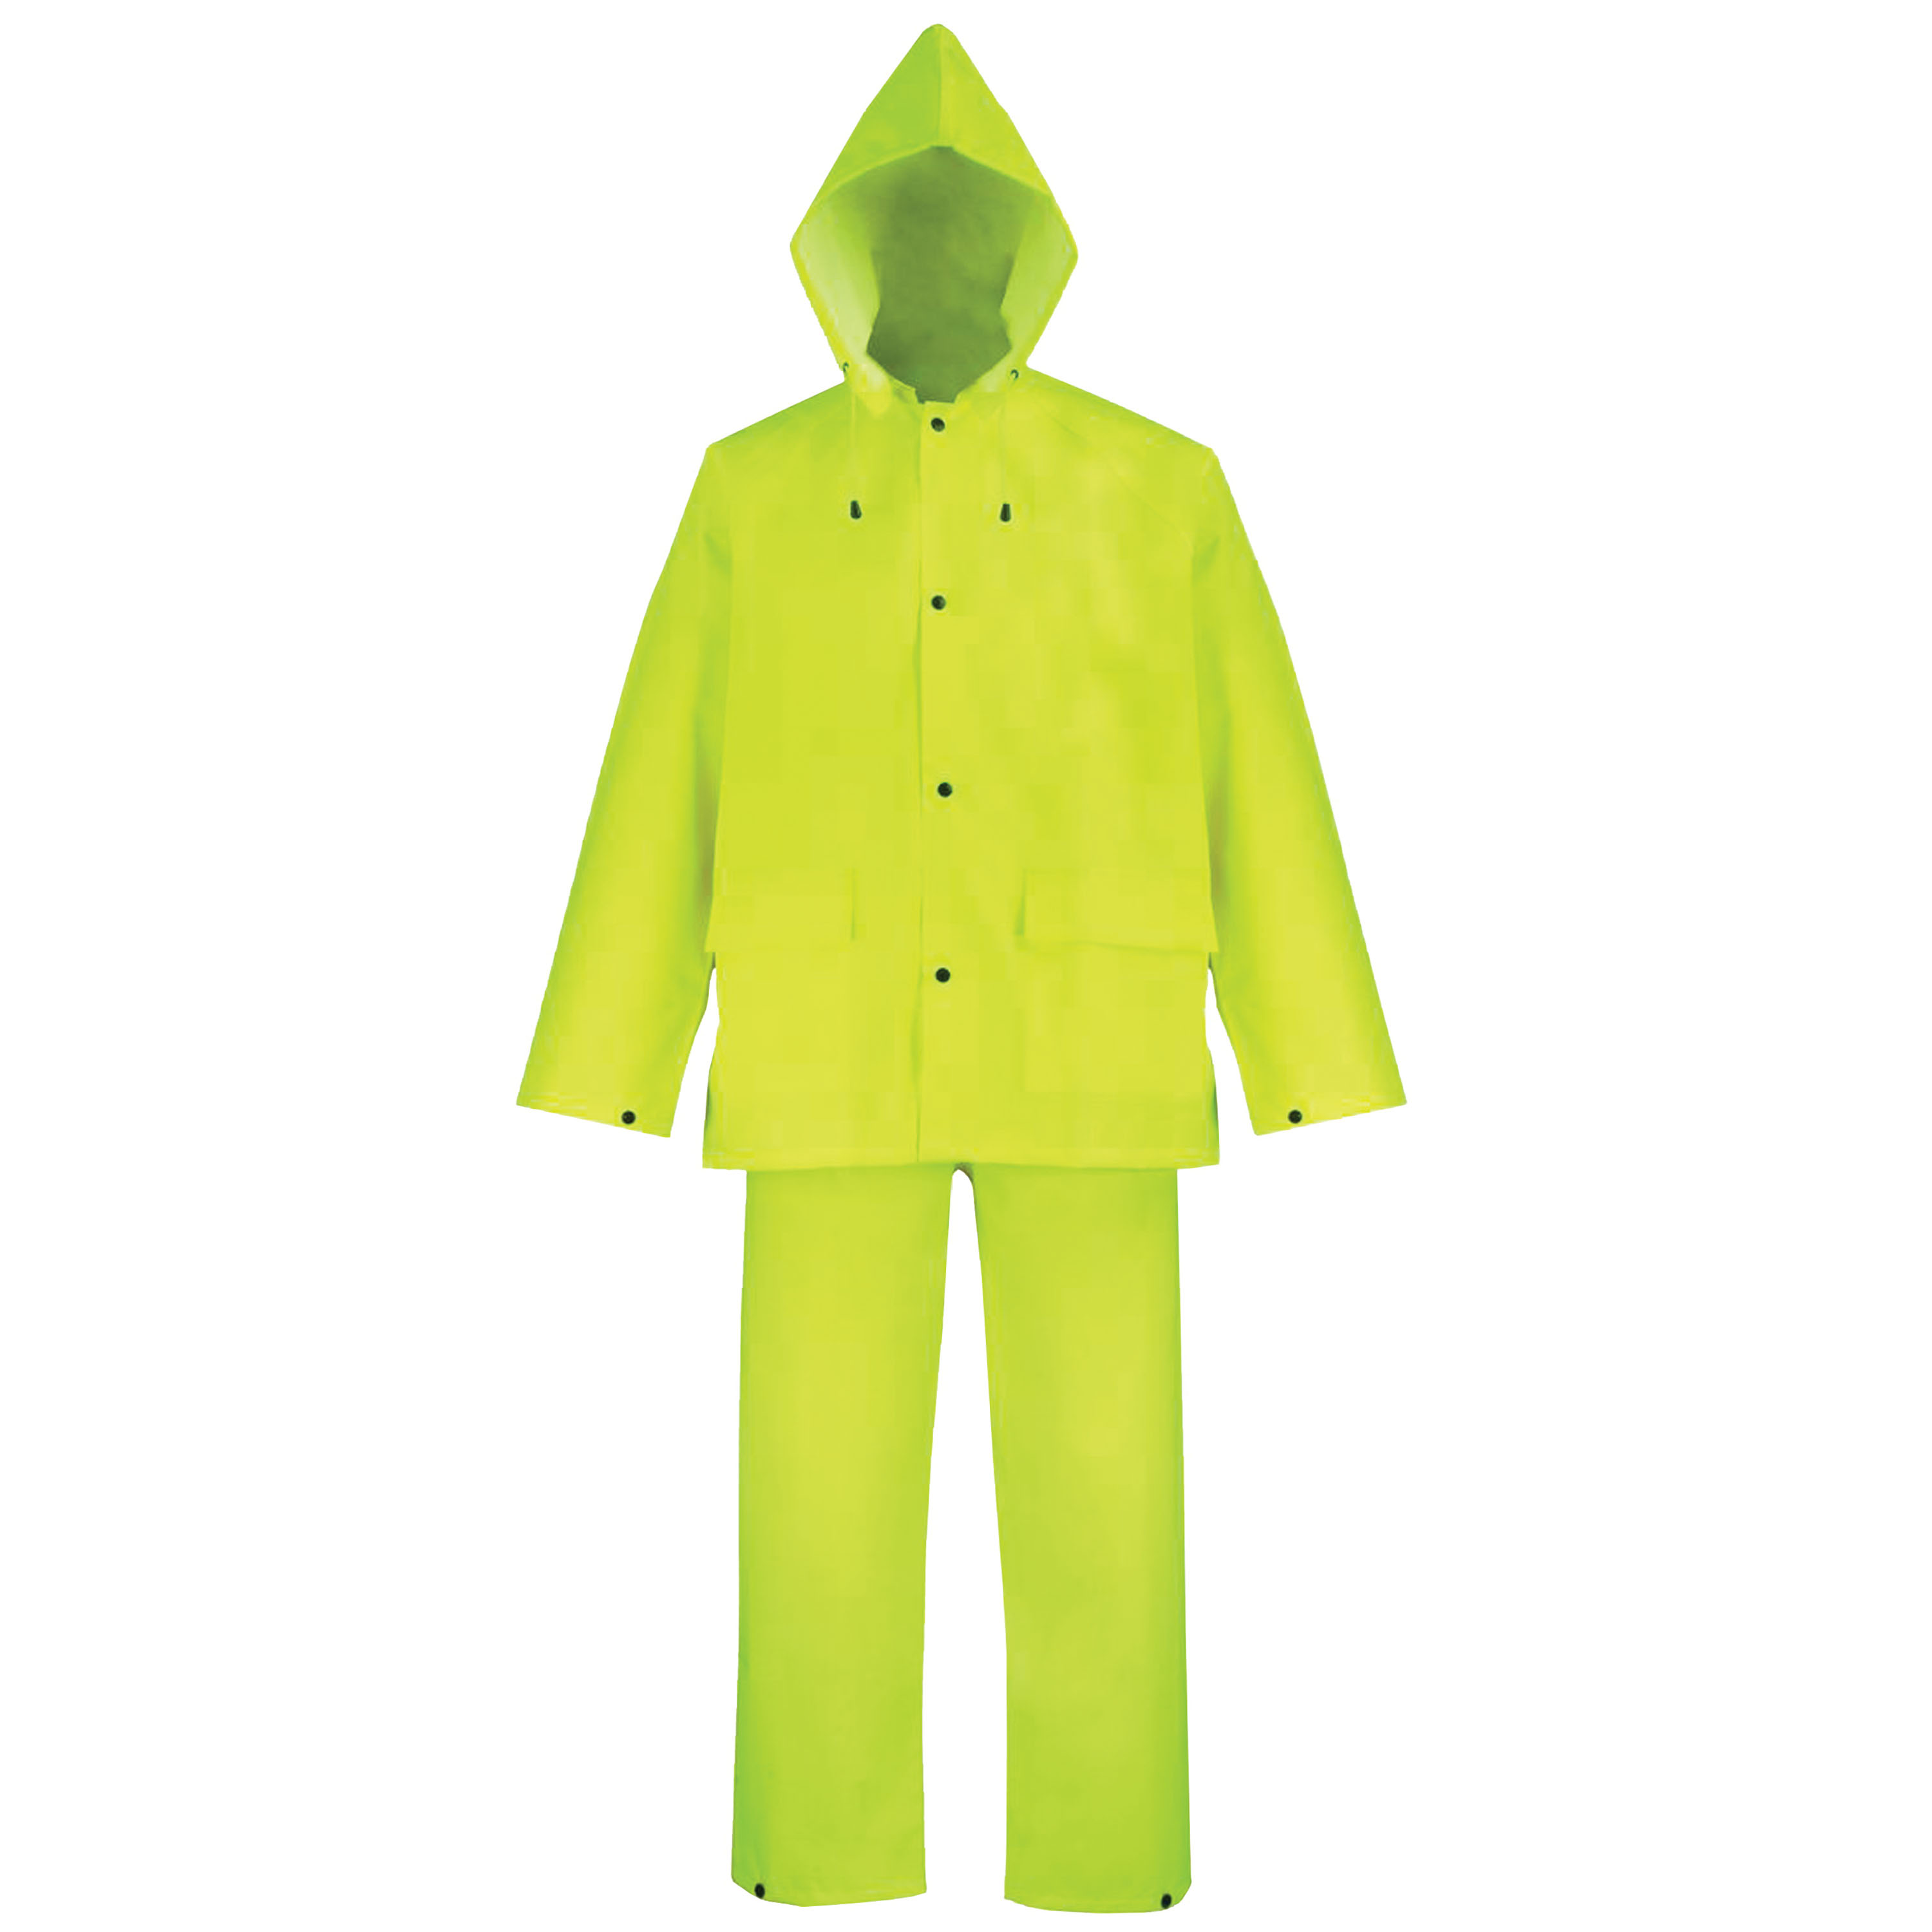 OX025PU-M Rain Suit, M, 28-1/2 in Inseam, Polyester, Hi-Viz Yellow, Comfortable Oxford Polyester Collar